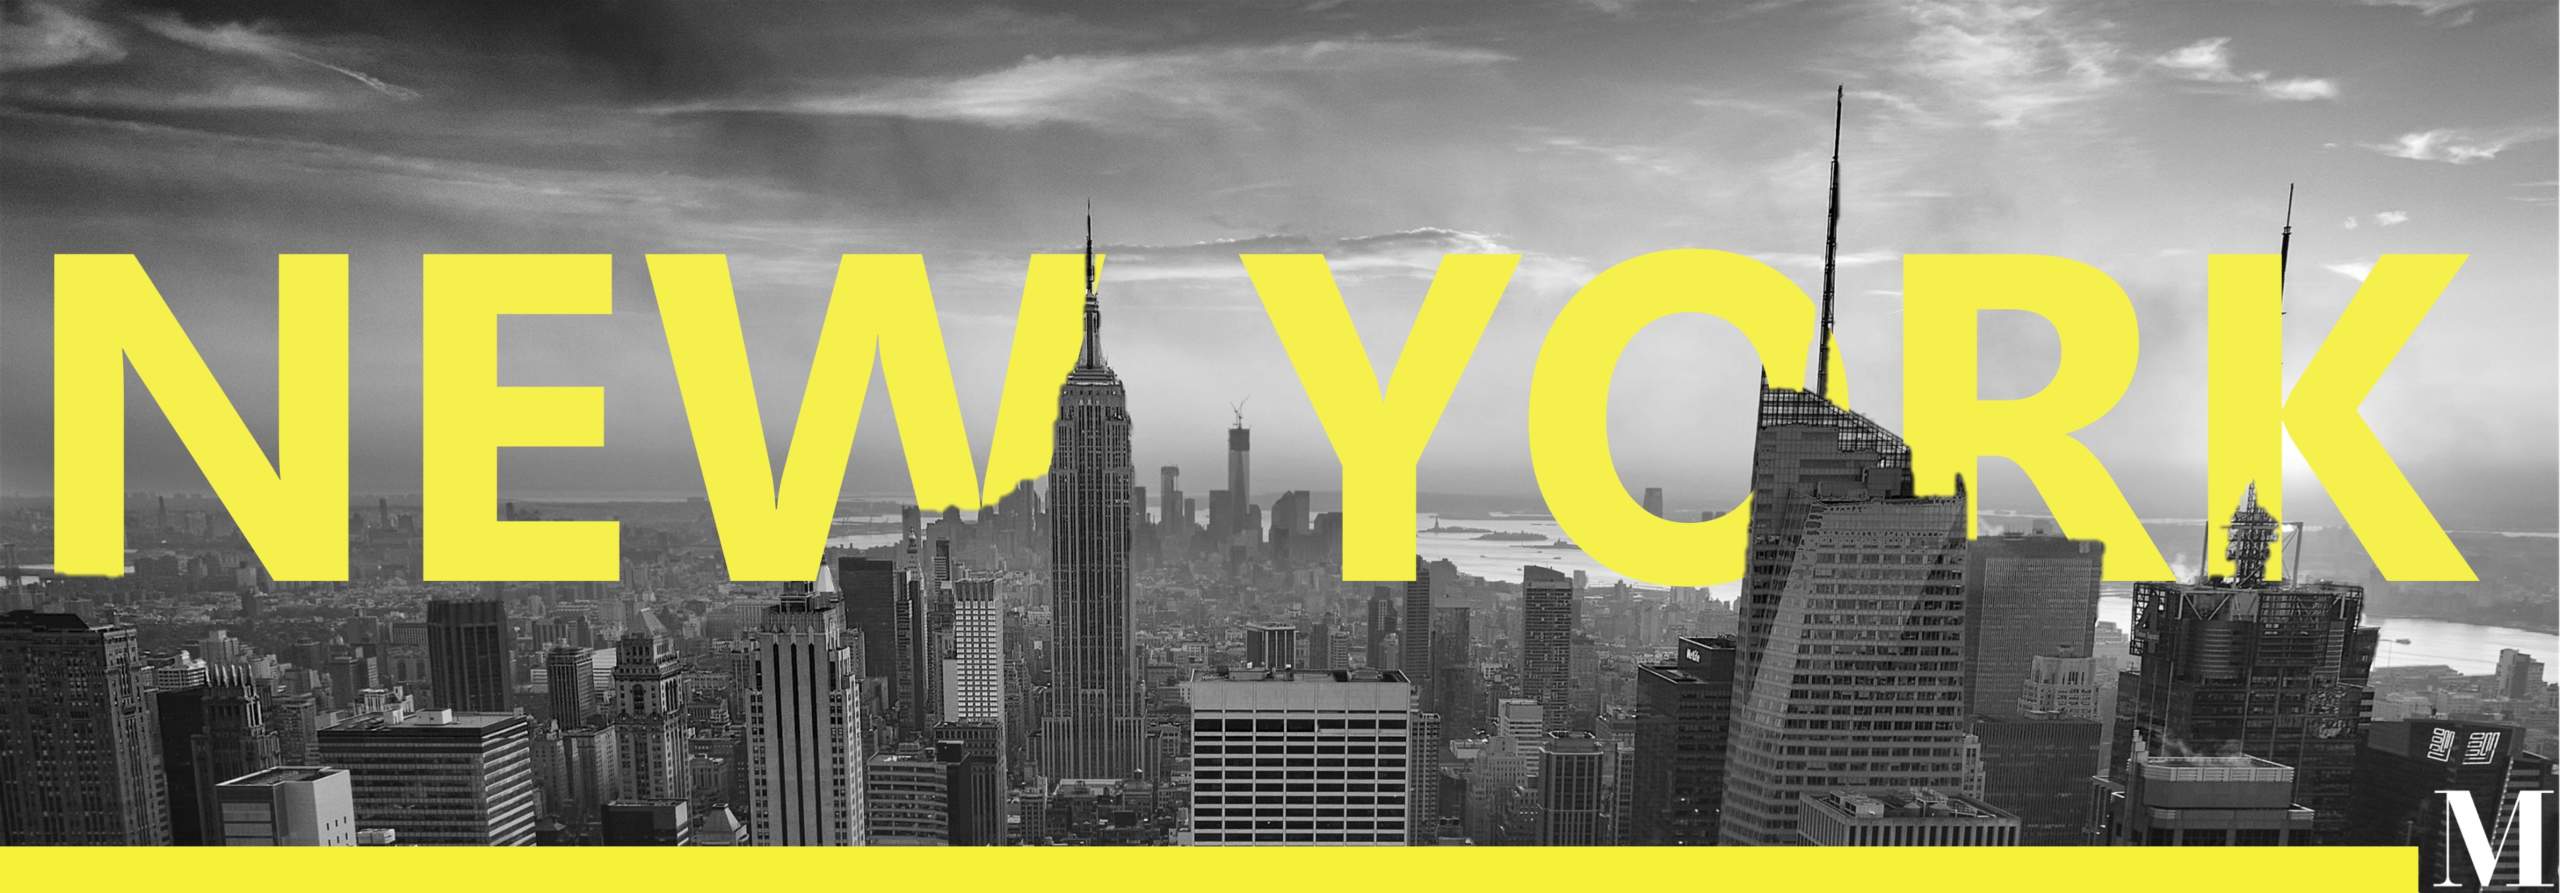 NEW YORK banner - Martin MacDonald